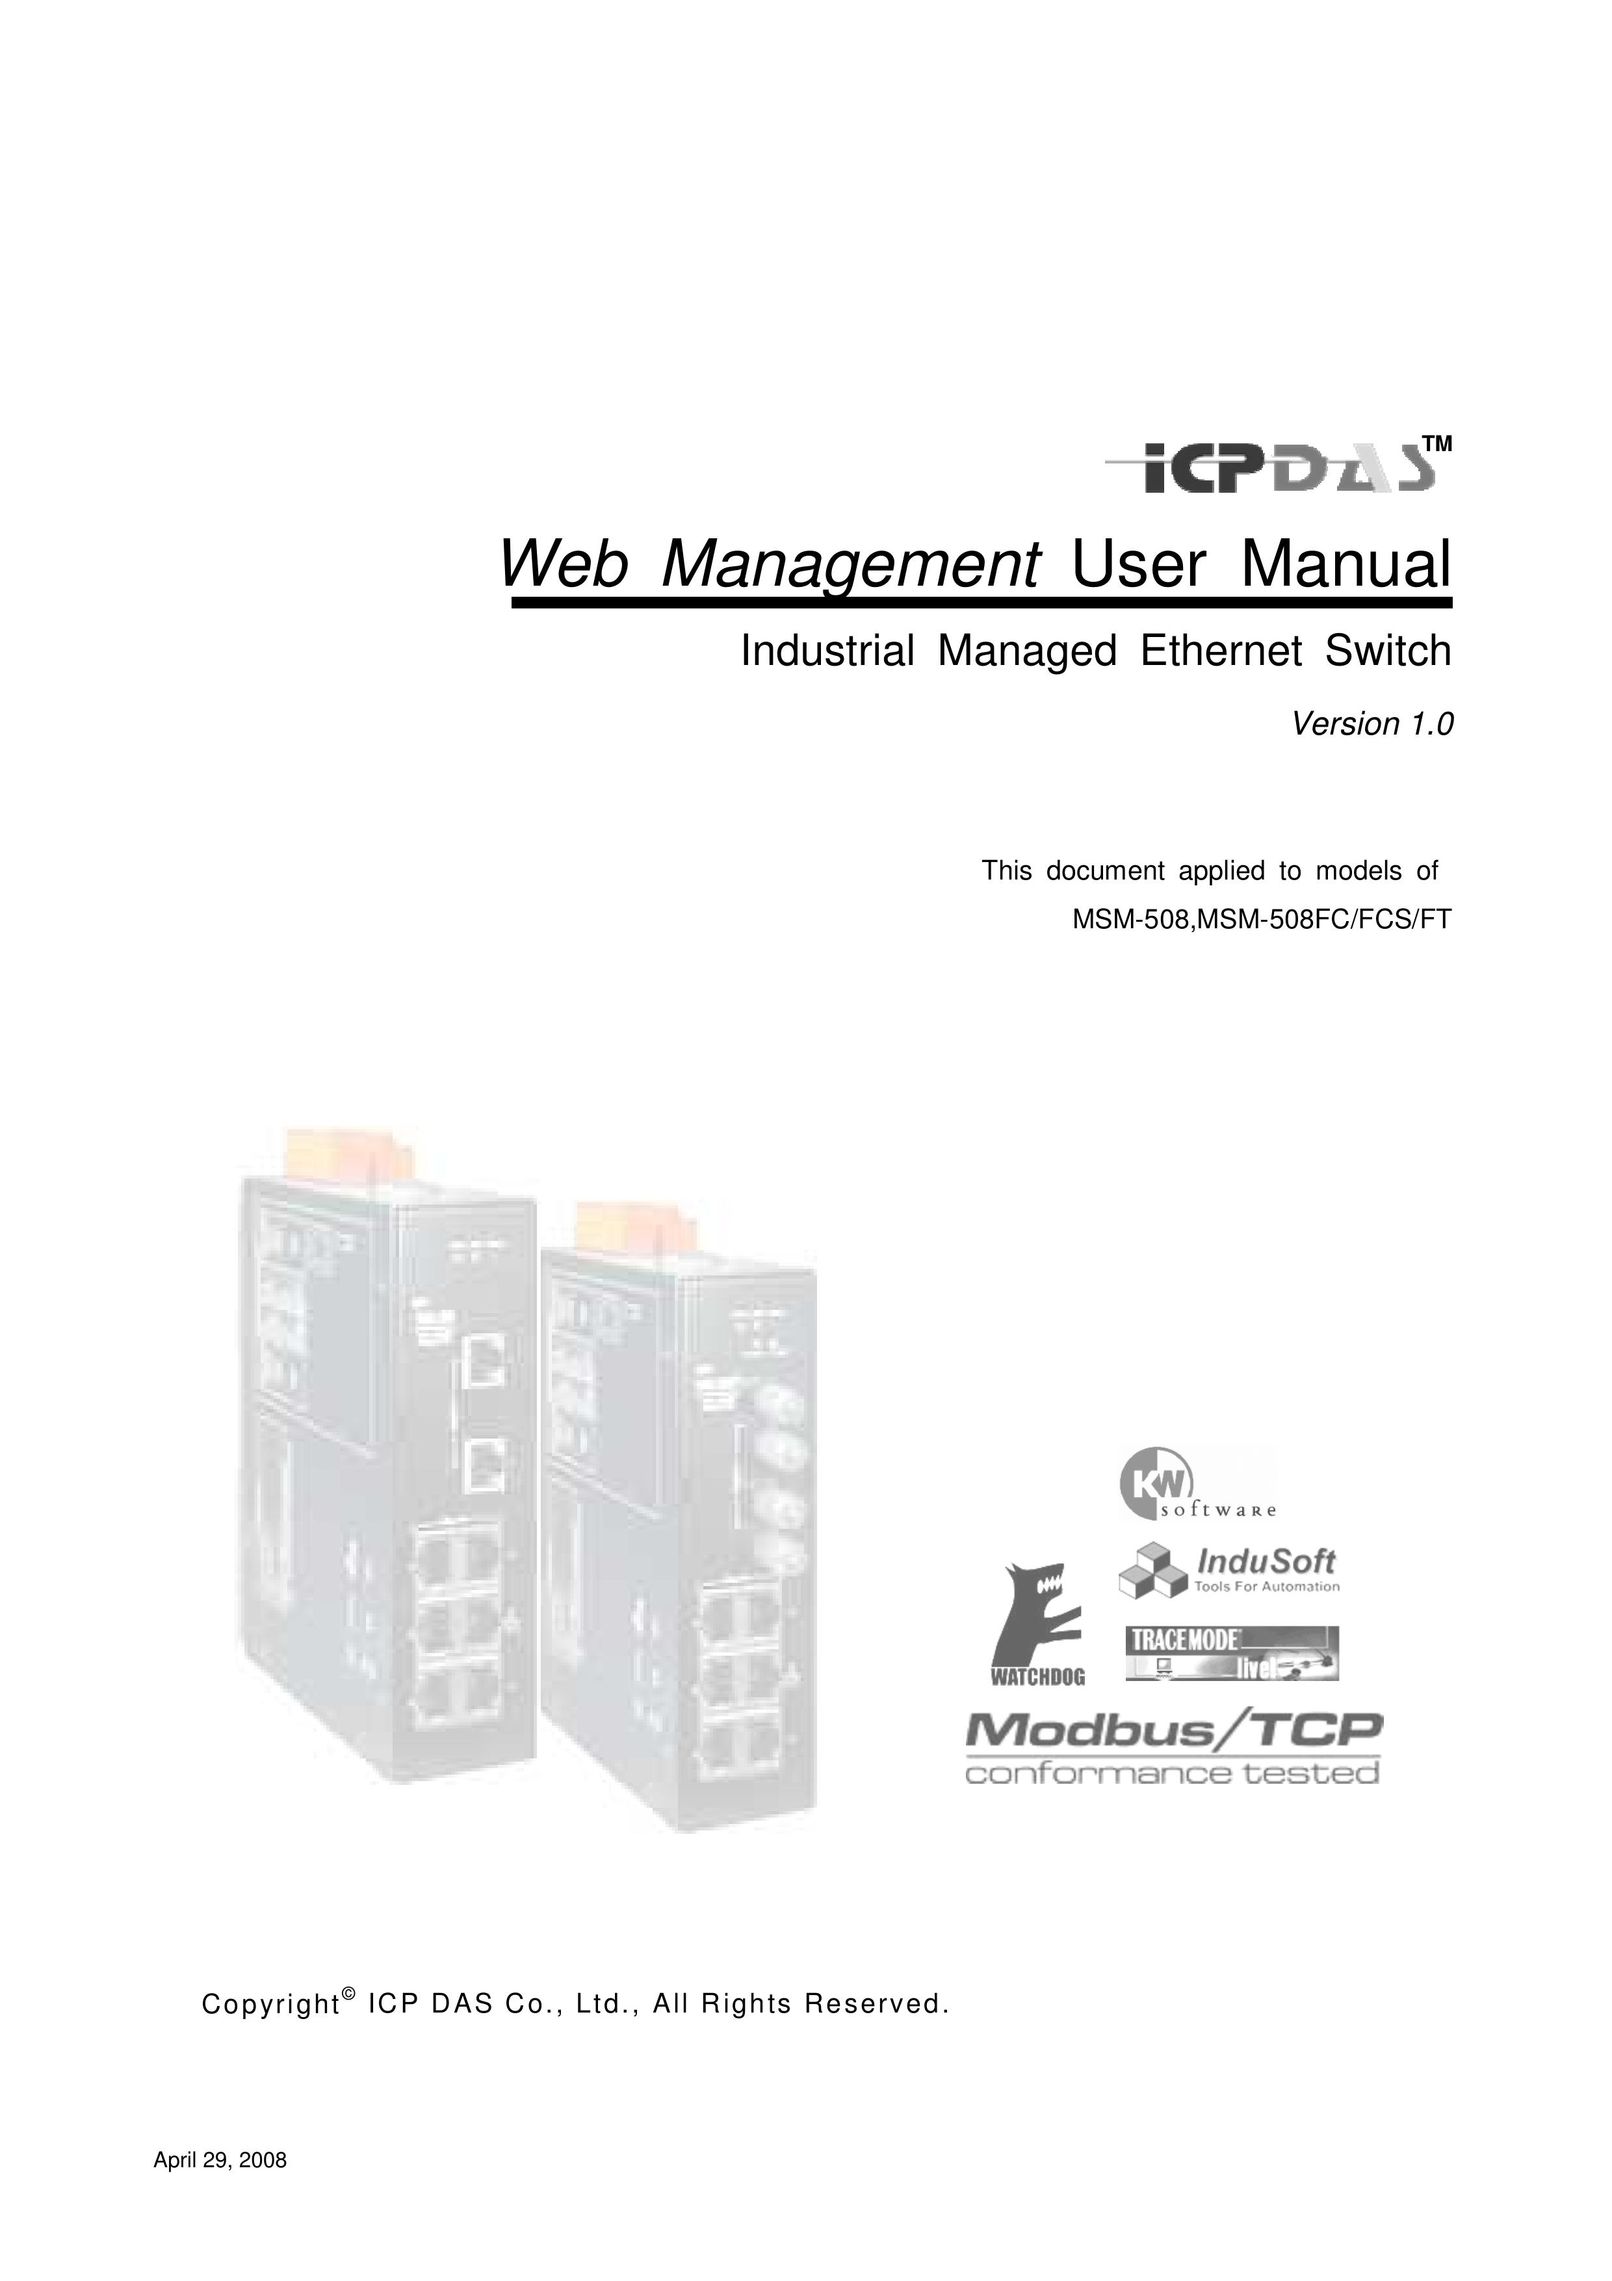 ICP DAS USA MSM-508FT Switch User Manual